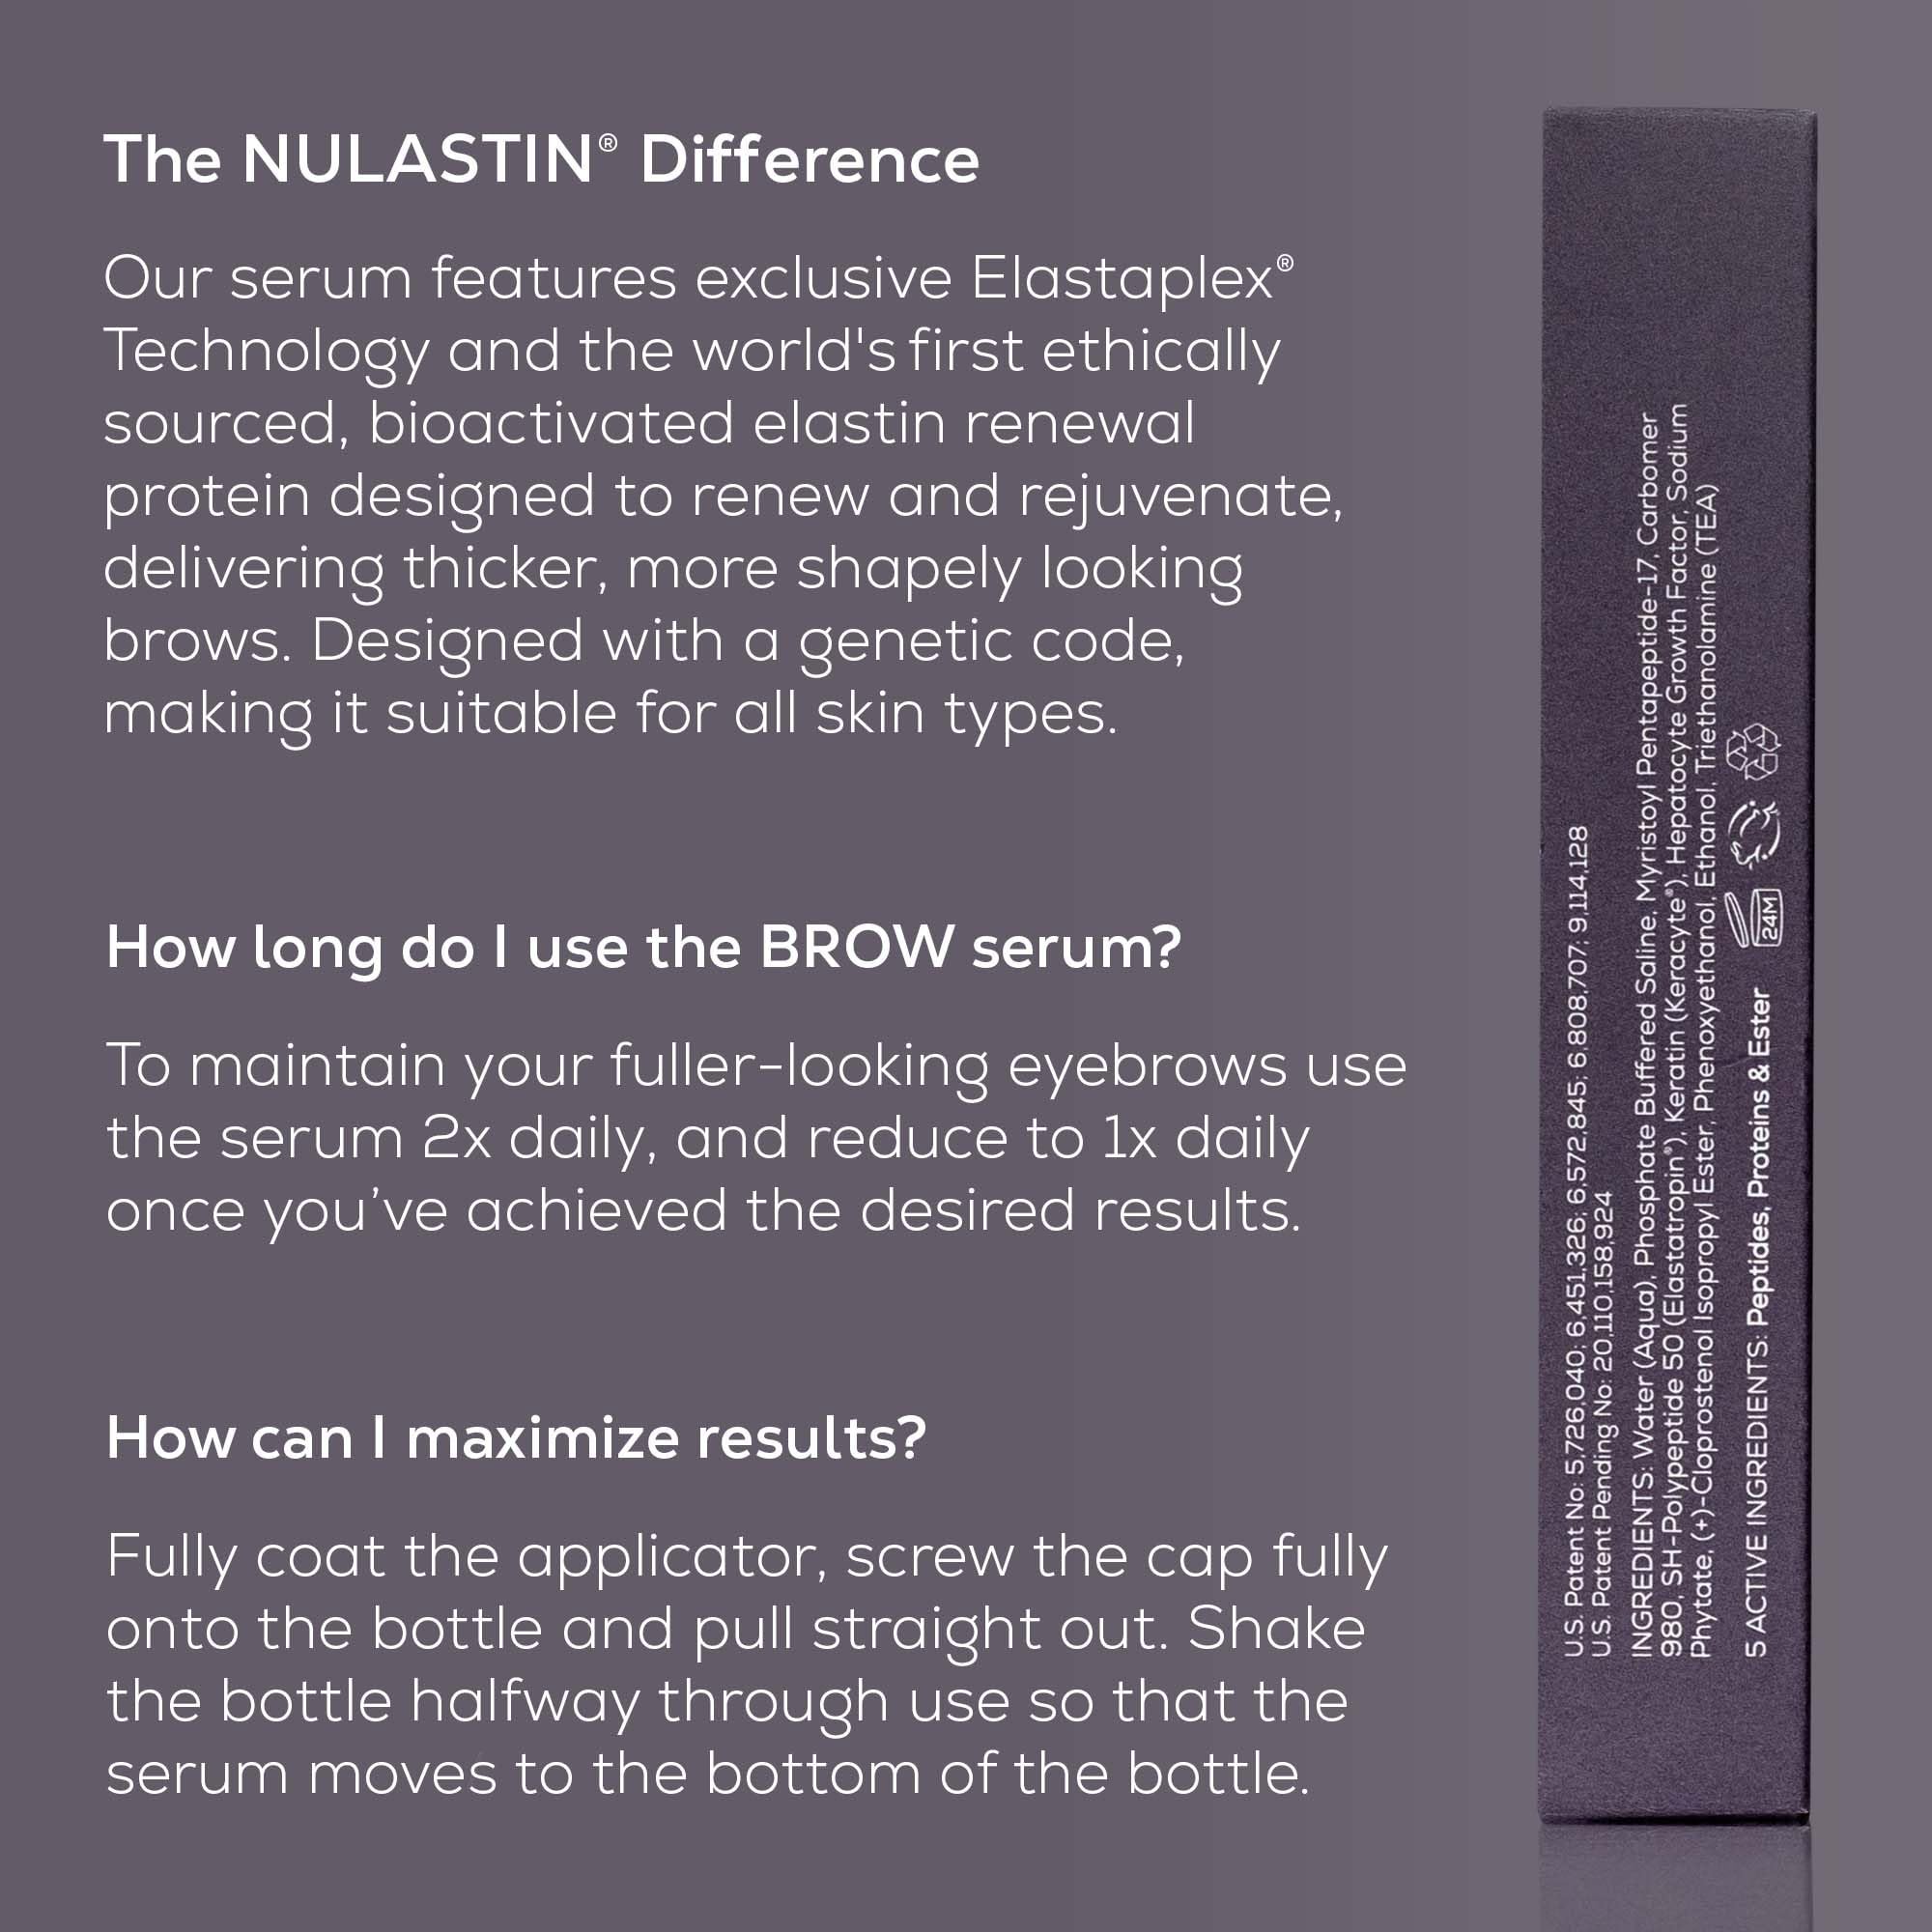 NULASTIN BROW Shape Altering Serum with Elastaplex, Eyebrow Enhancing Treatment for Thicker Looking Brows, Vegan-Friendly & Cruelty-Free (3 ml)